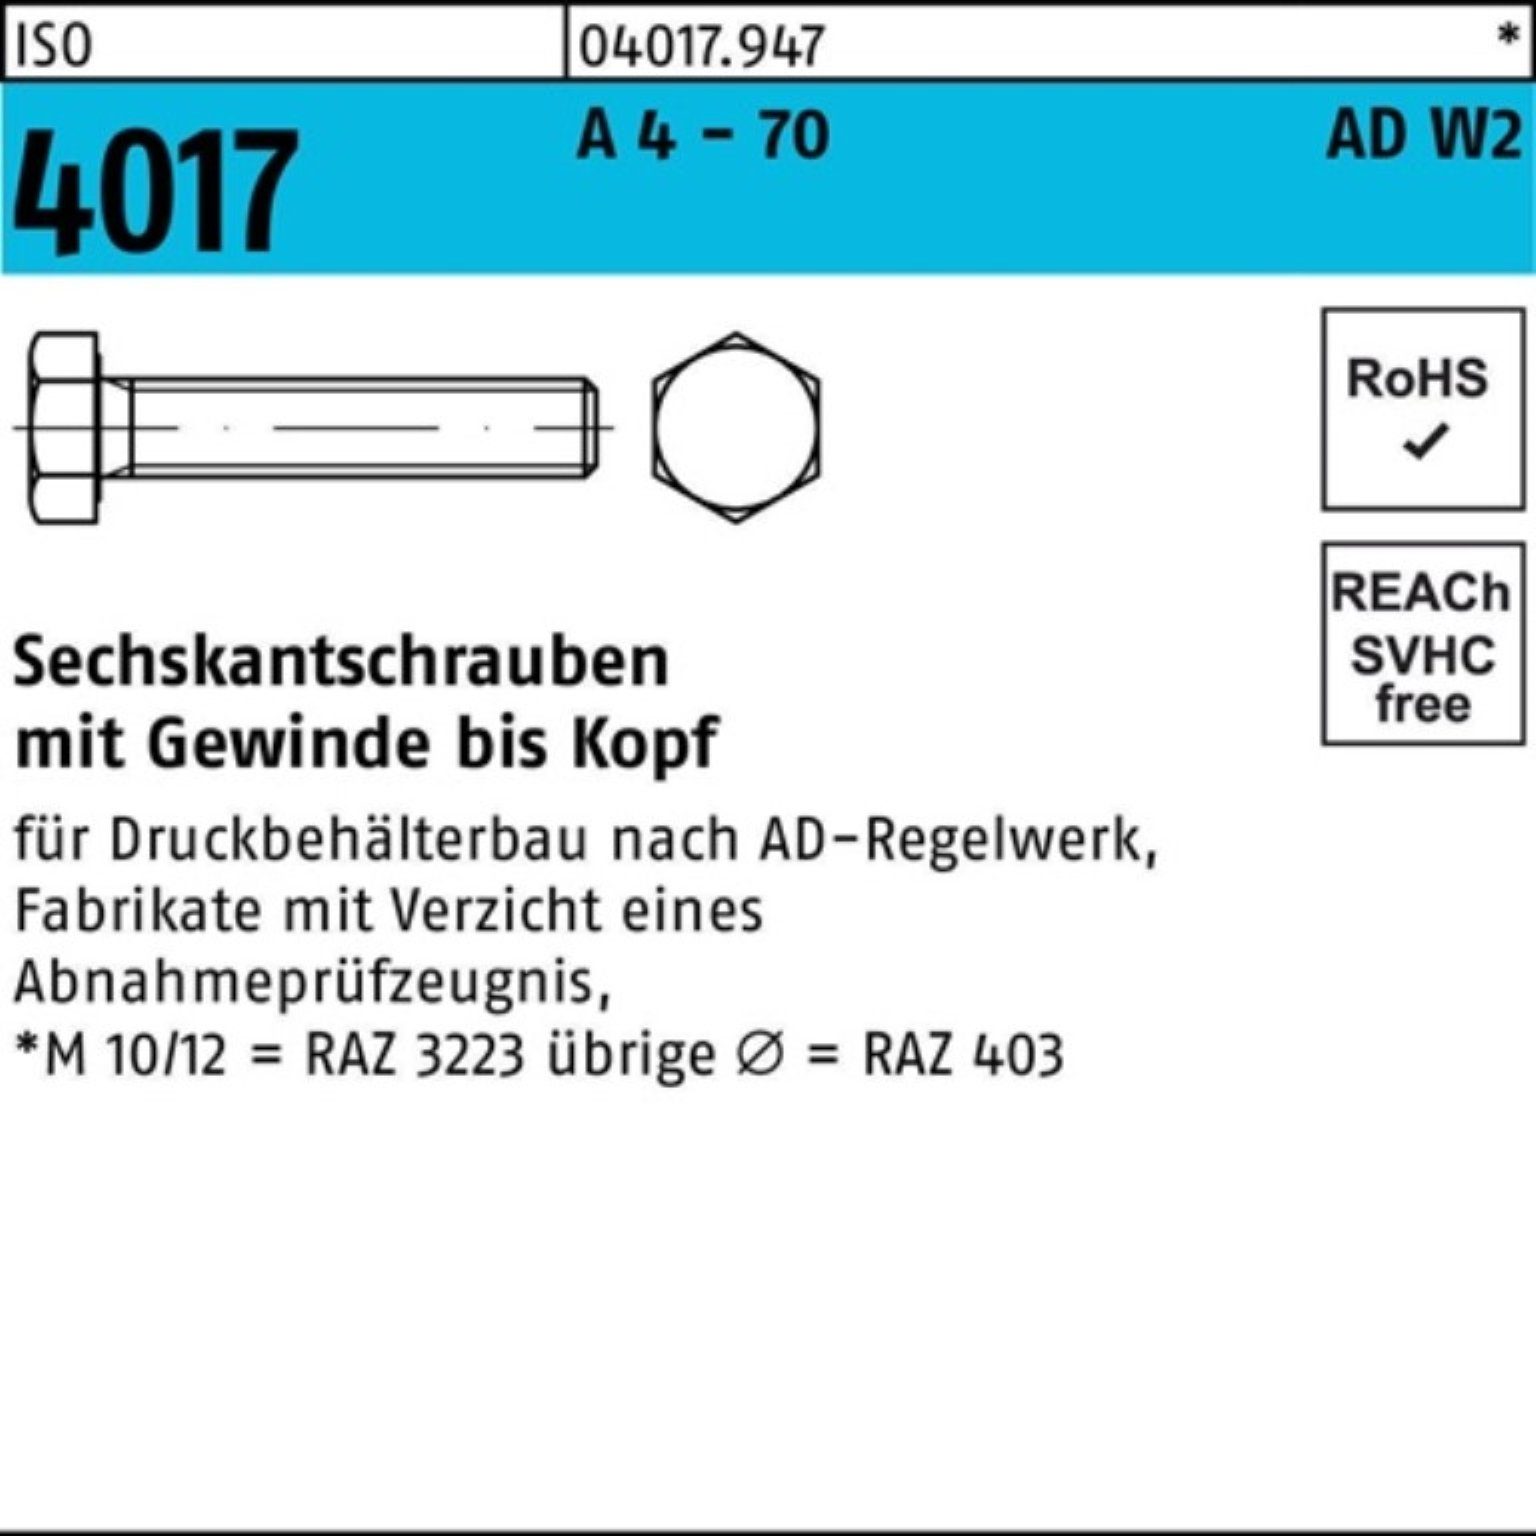 Bufab Sechskantschraube 100er Pack Sechskantschraube ISO 4017 VG M10x 20 A 4 - 70 AD-W2 100 St | Schrauben